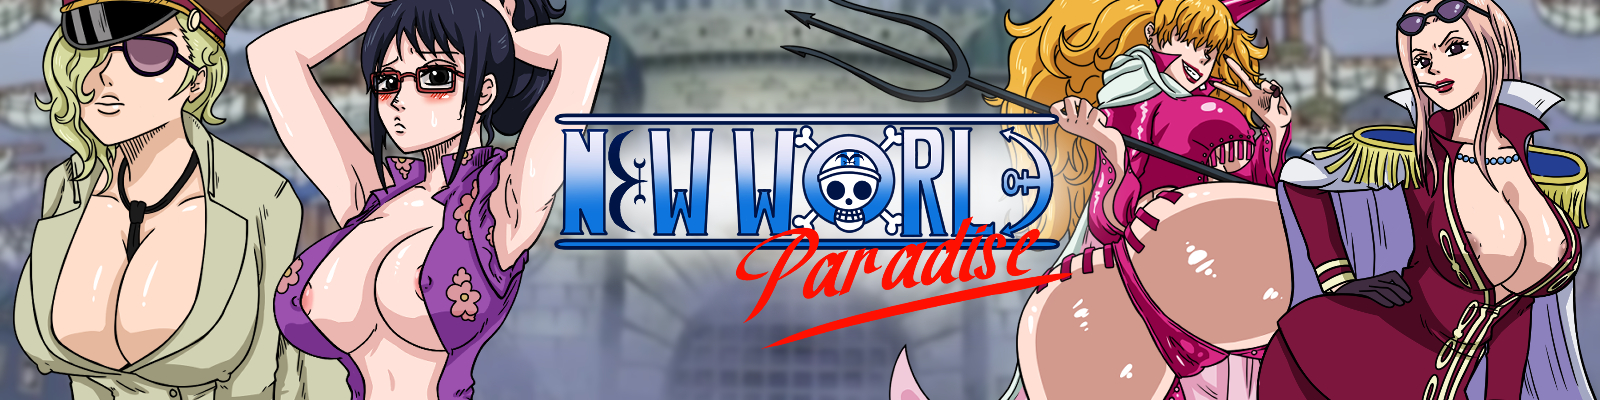 New World Paradise1.jpg